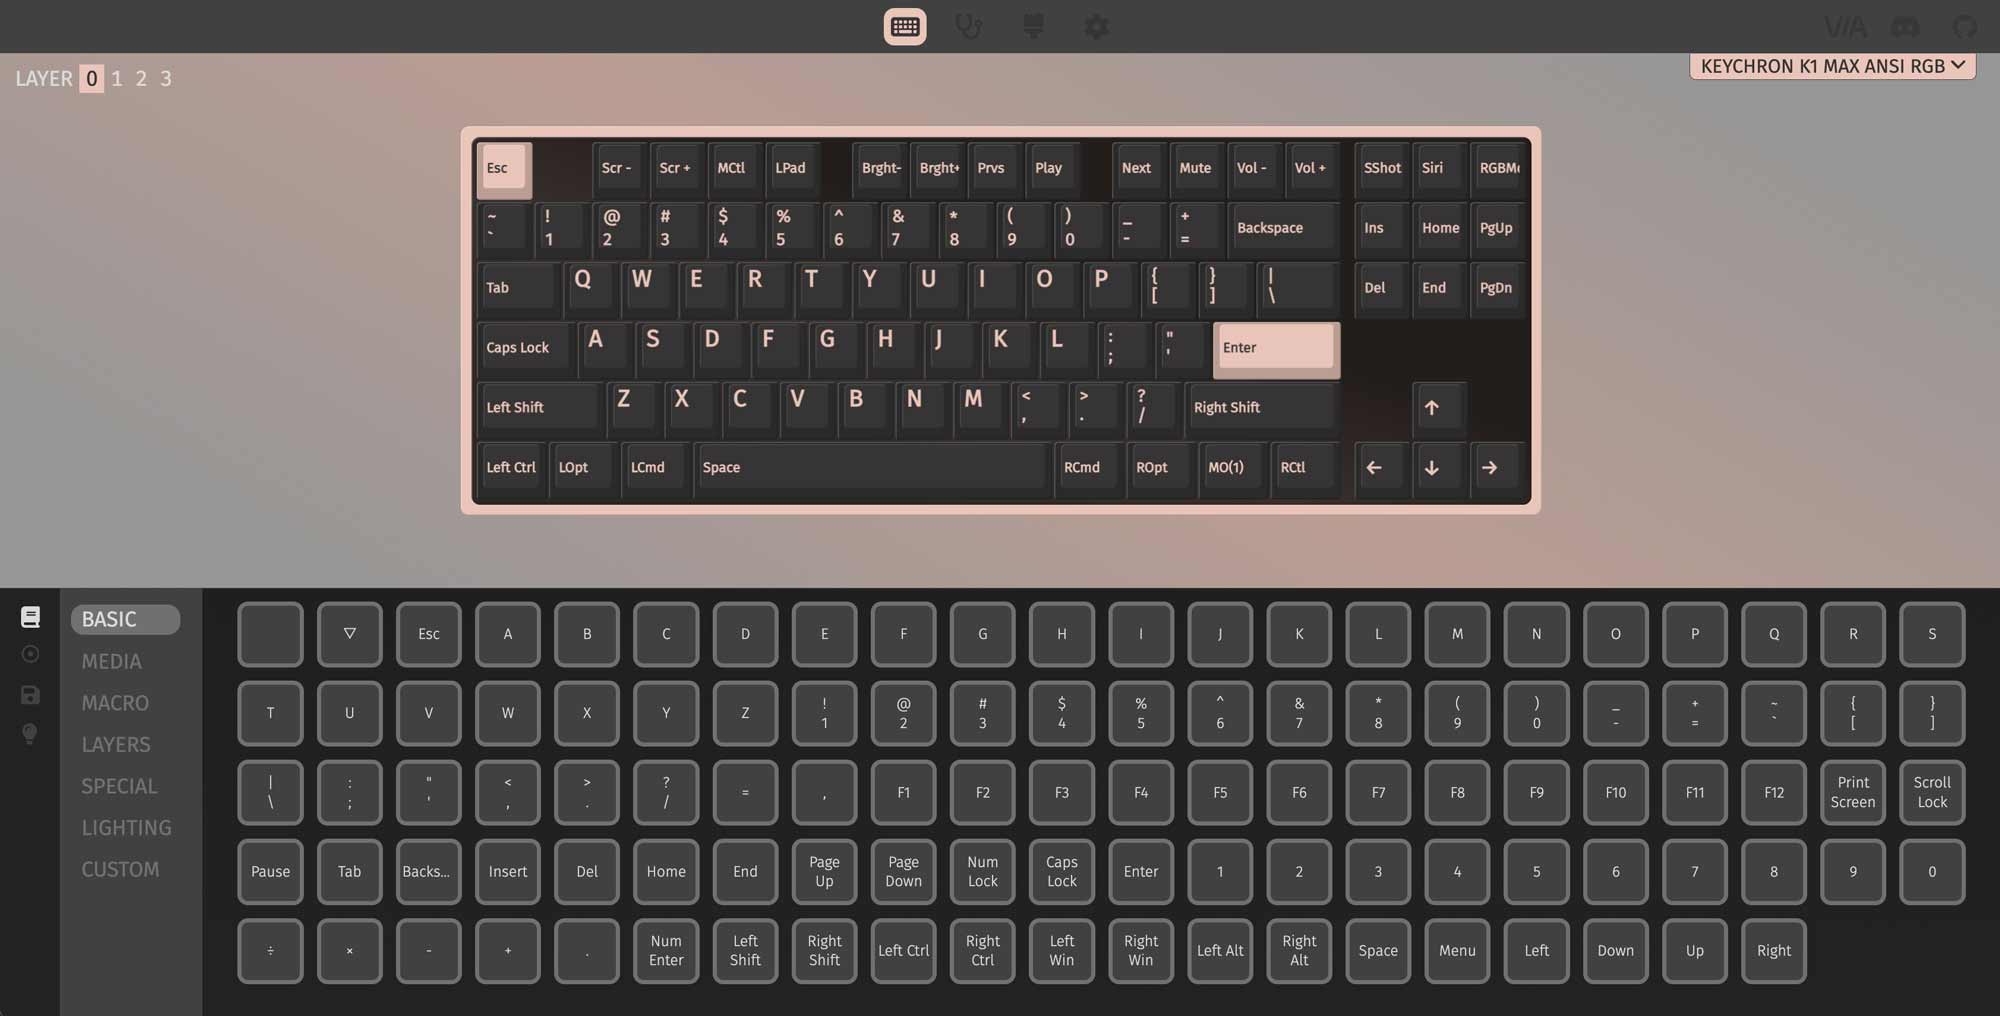 VIA Interface of the Keychron K1 Max Wireless Mechanical Keyboard